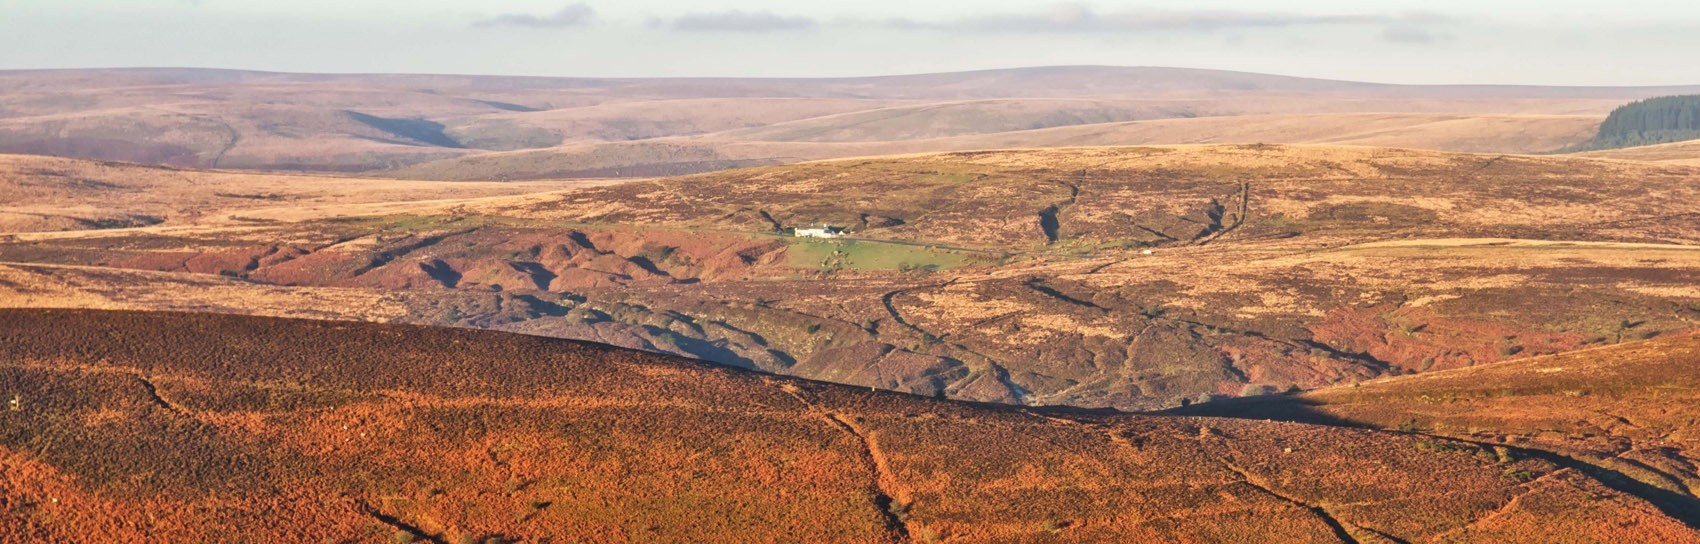 Dartmoor as viewed from Hameldown. Photograph by ALEX GRAEME